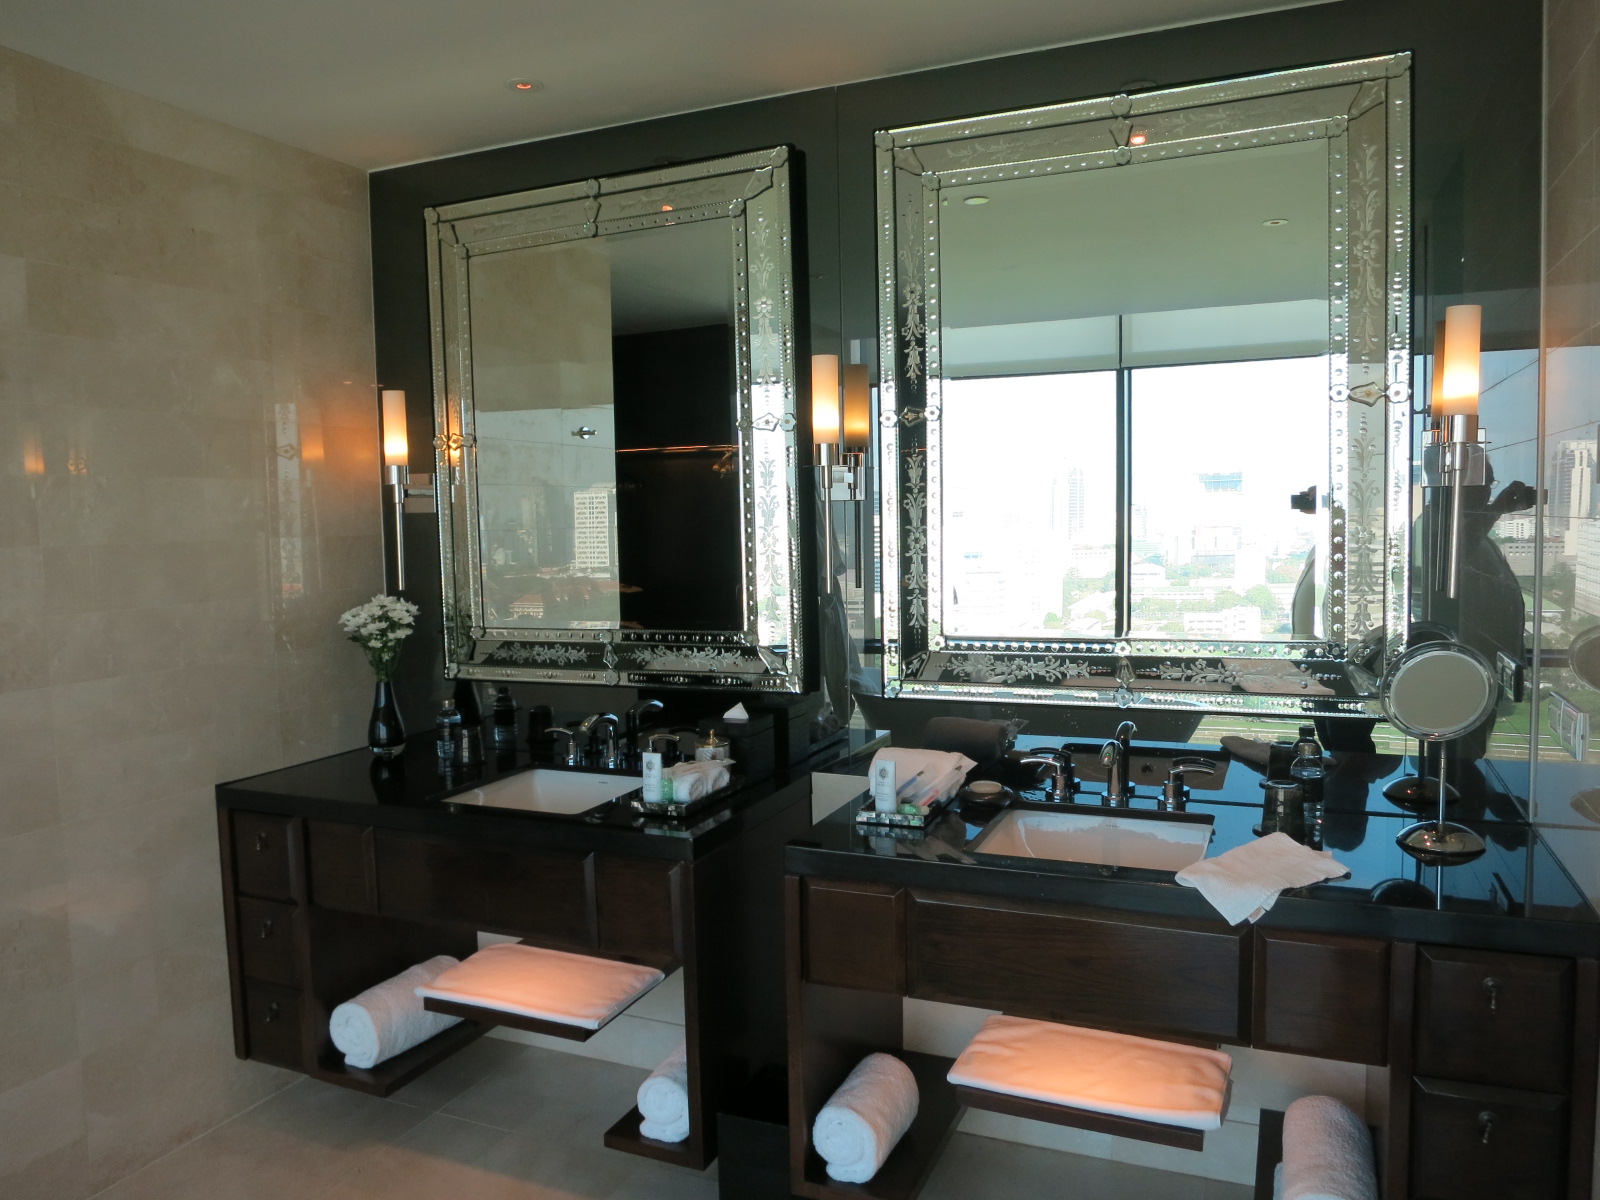 St. Regis Bangkok hotel Caroline Astor Suite bathroom sinks